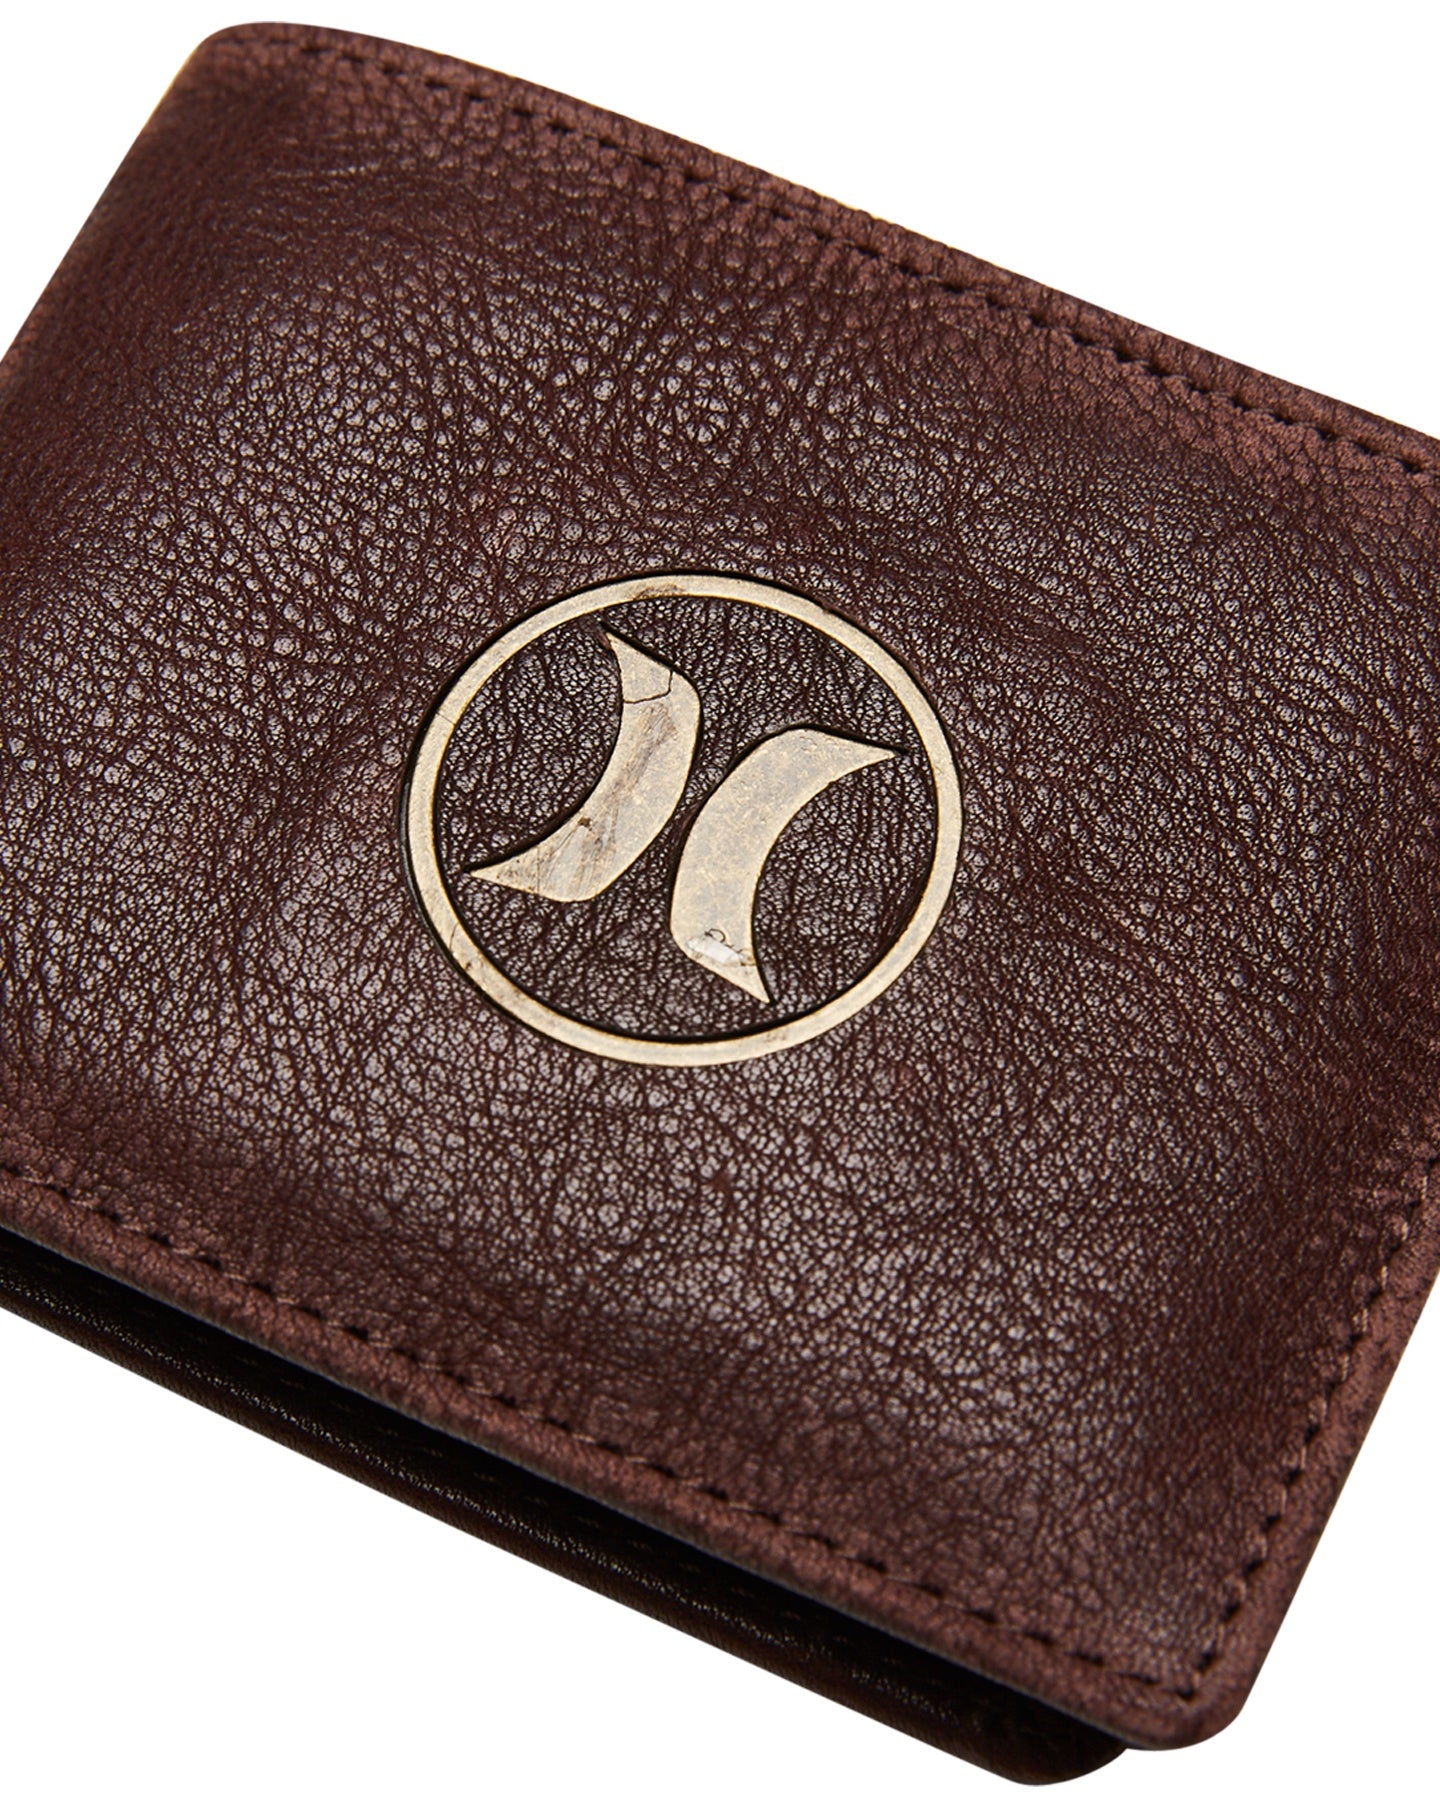 U Restructured Leather Wallet